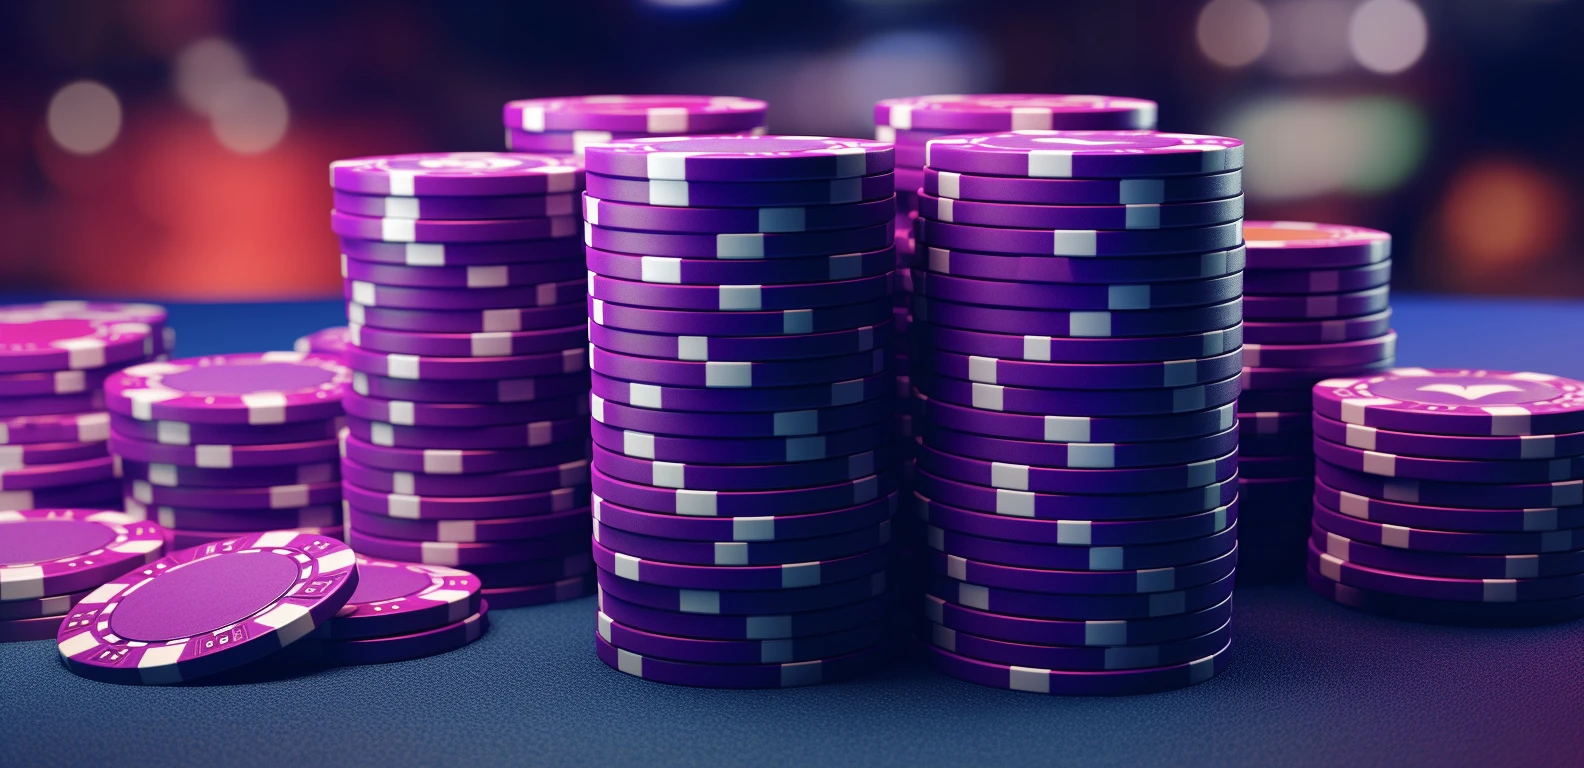 Casino chips image